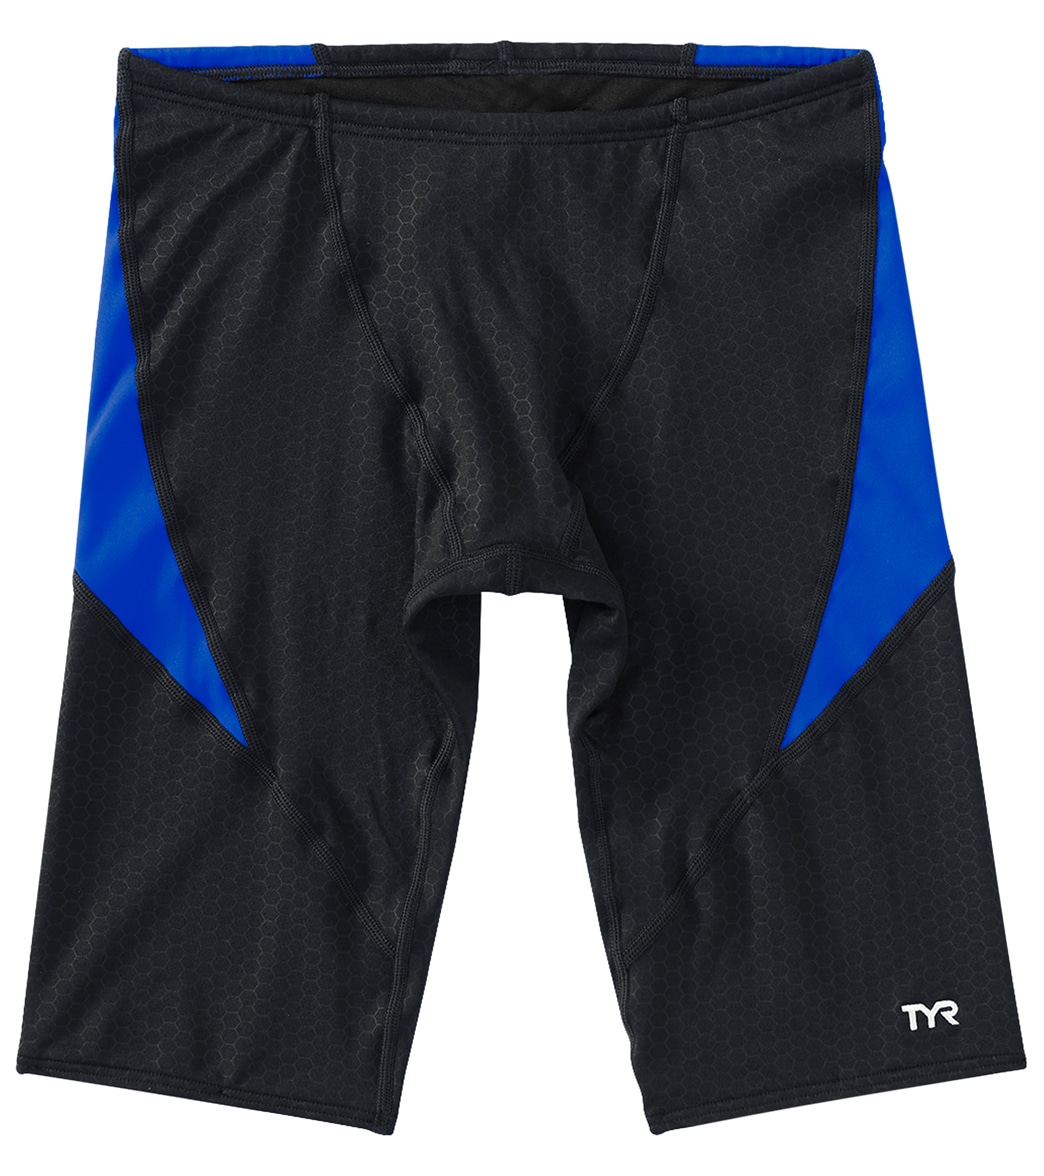 TYR Boys' Hexa Curve Splice Jammer Swimsuit - Black/Blue 22 - Swimoutlet.com